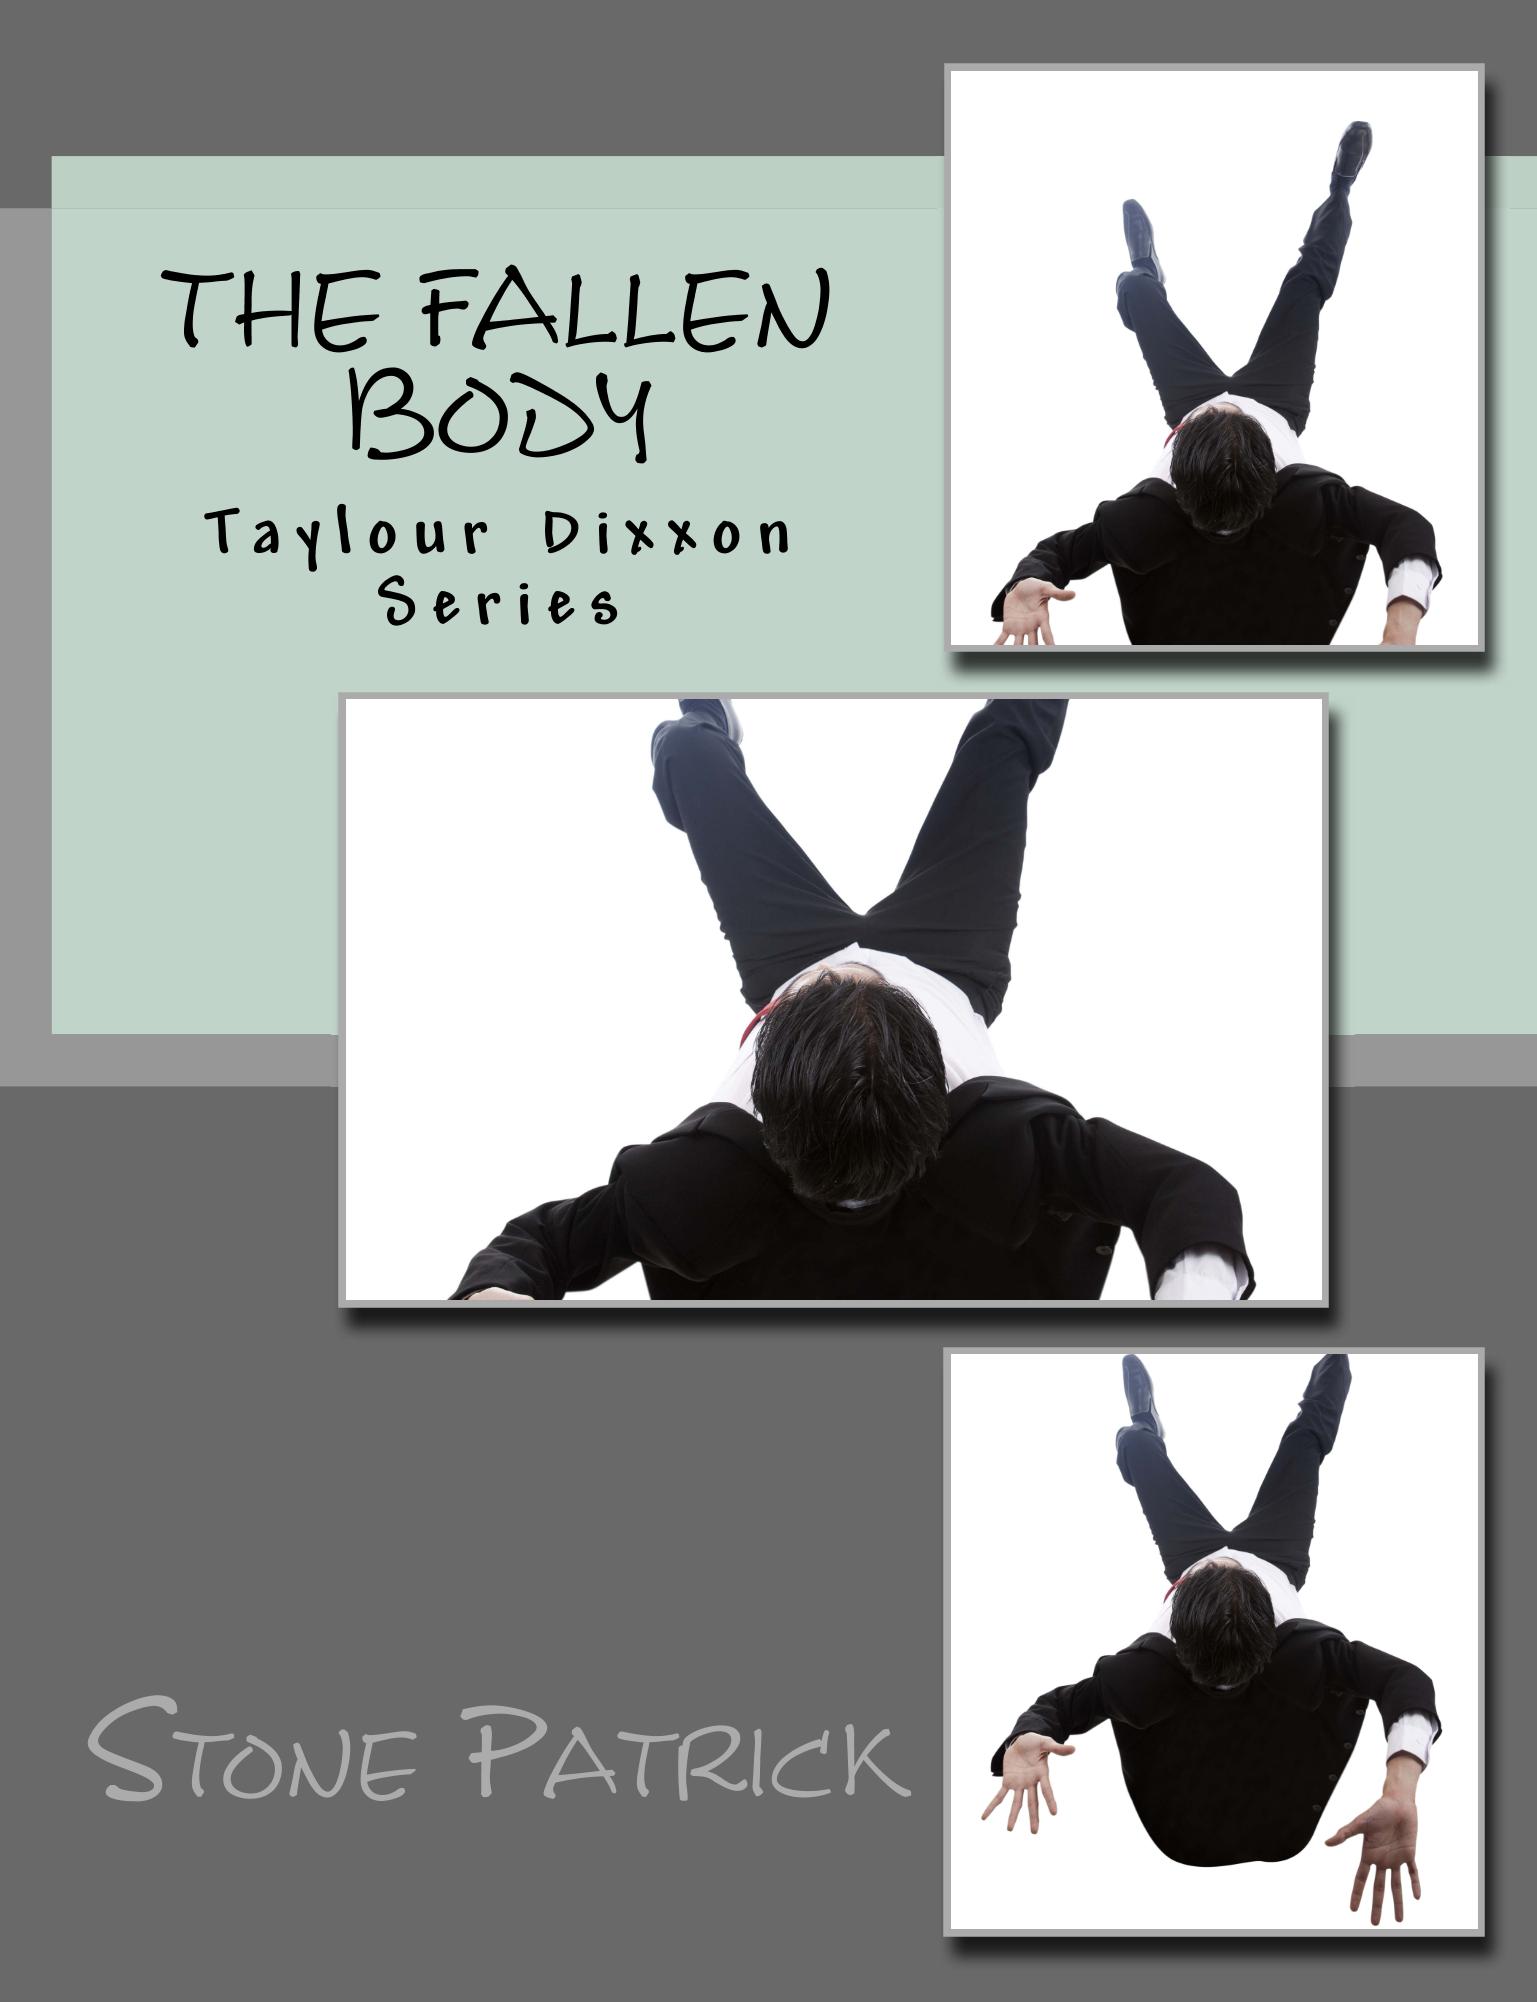 FREE: The Fallen Body by Stone Patrick